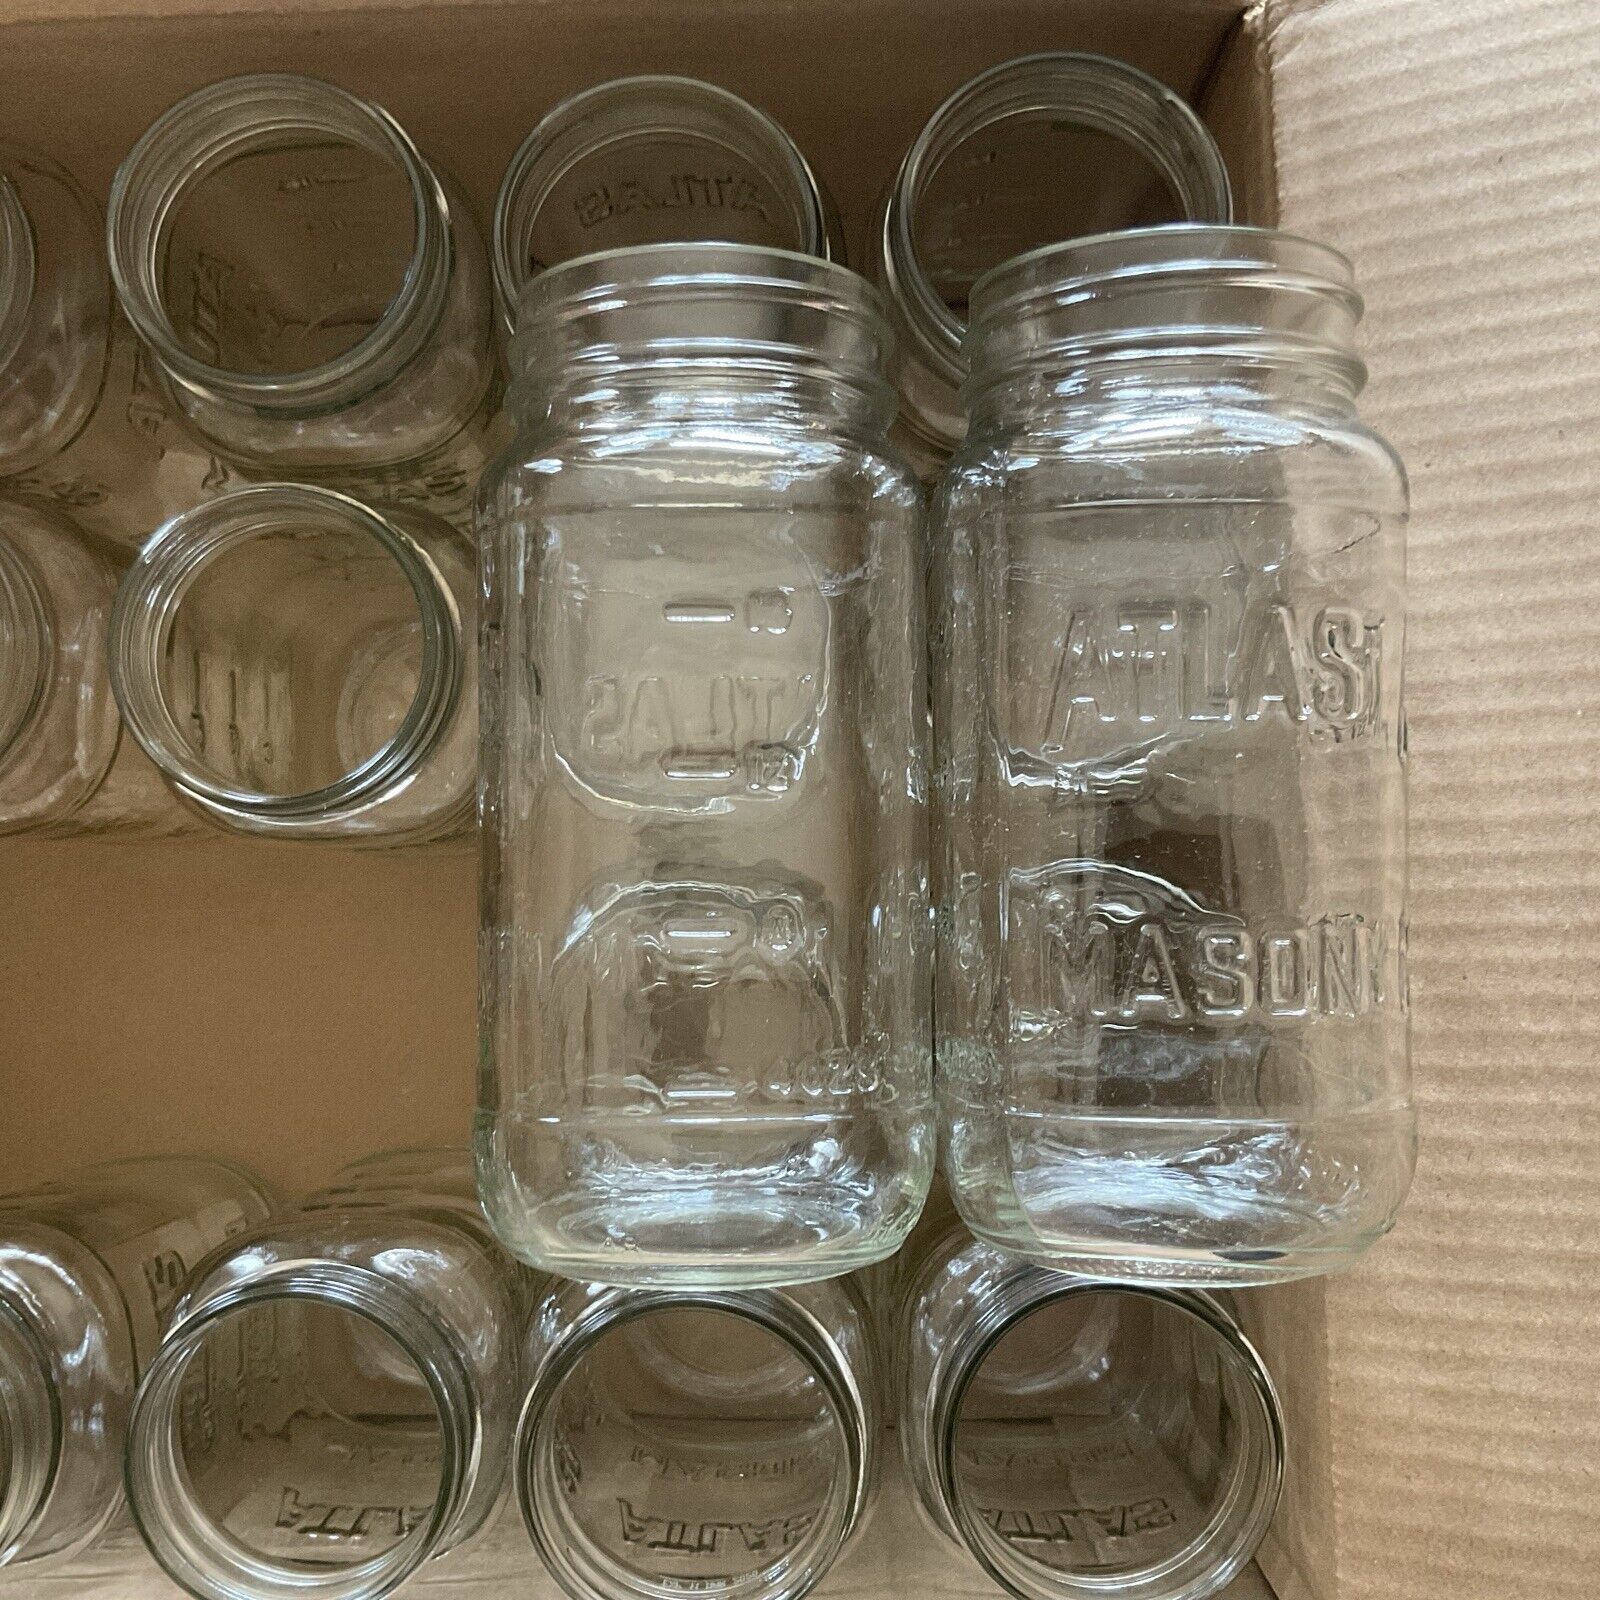 Lot of 16 Atlas Mason Square Glass 16 oz Measurement Jars Clean